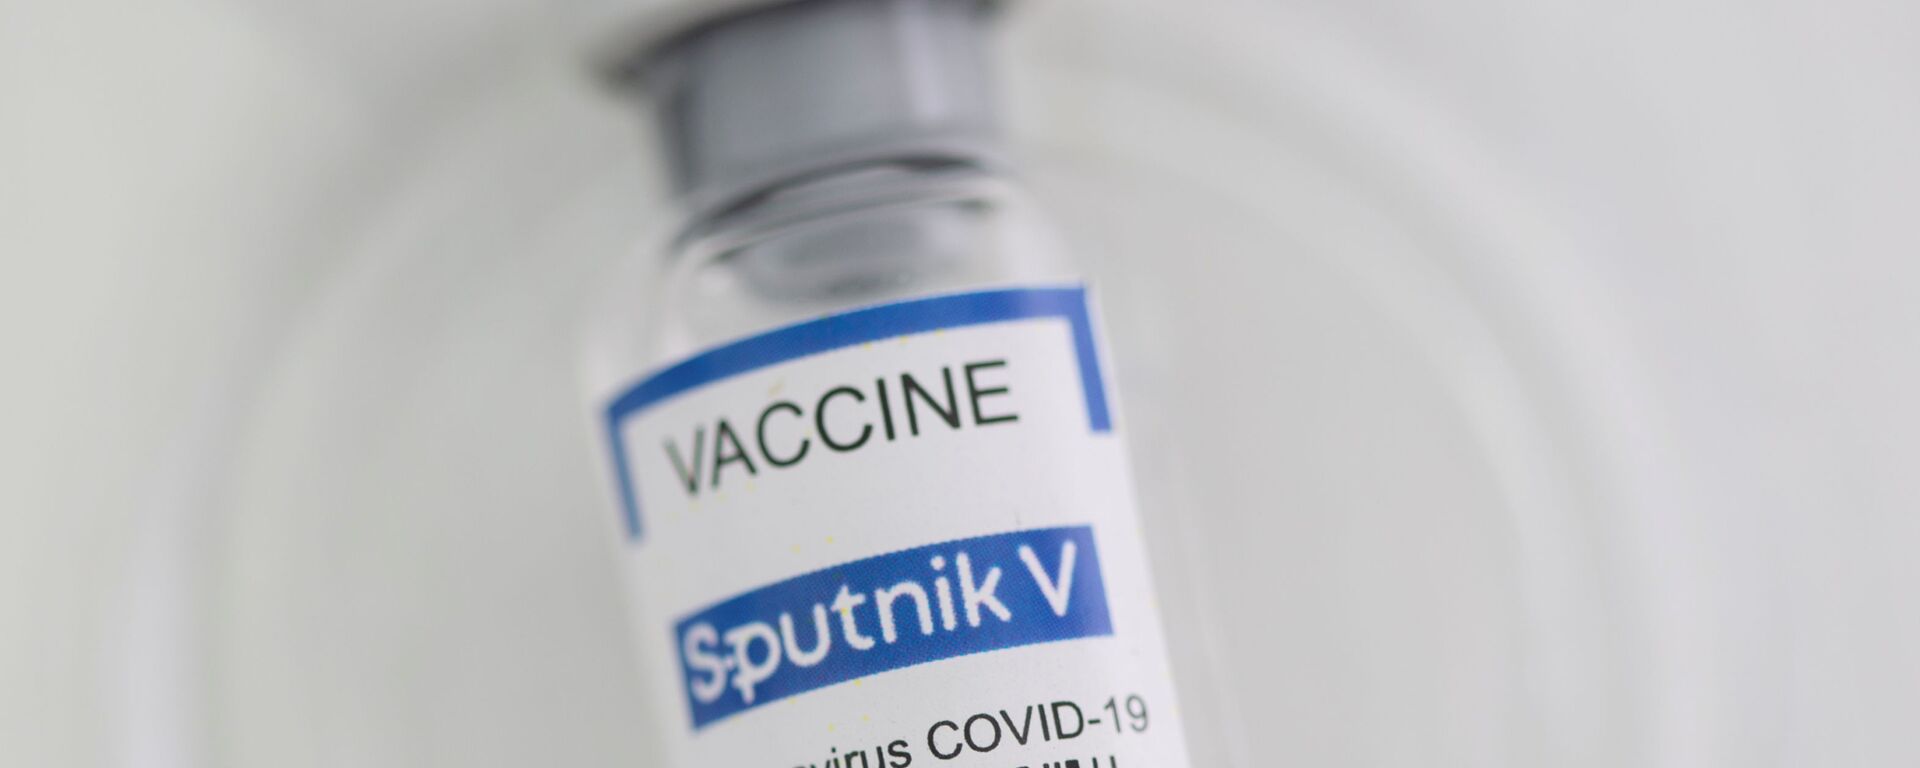 A vial labelled Sputnik V coronavirus disease (COVID-19) vaccine is seen in this illustration picture taken on 2 May 2021. - Sputnik International, 1920, 05.12.2021